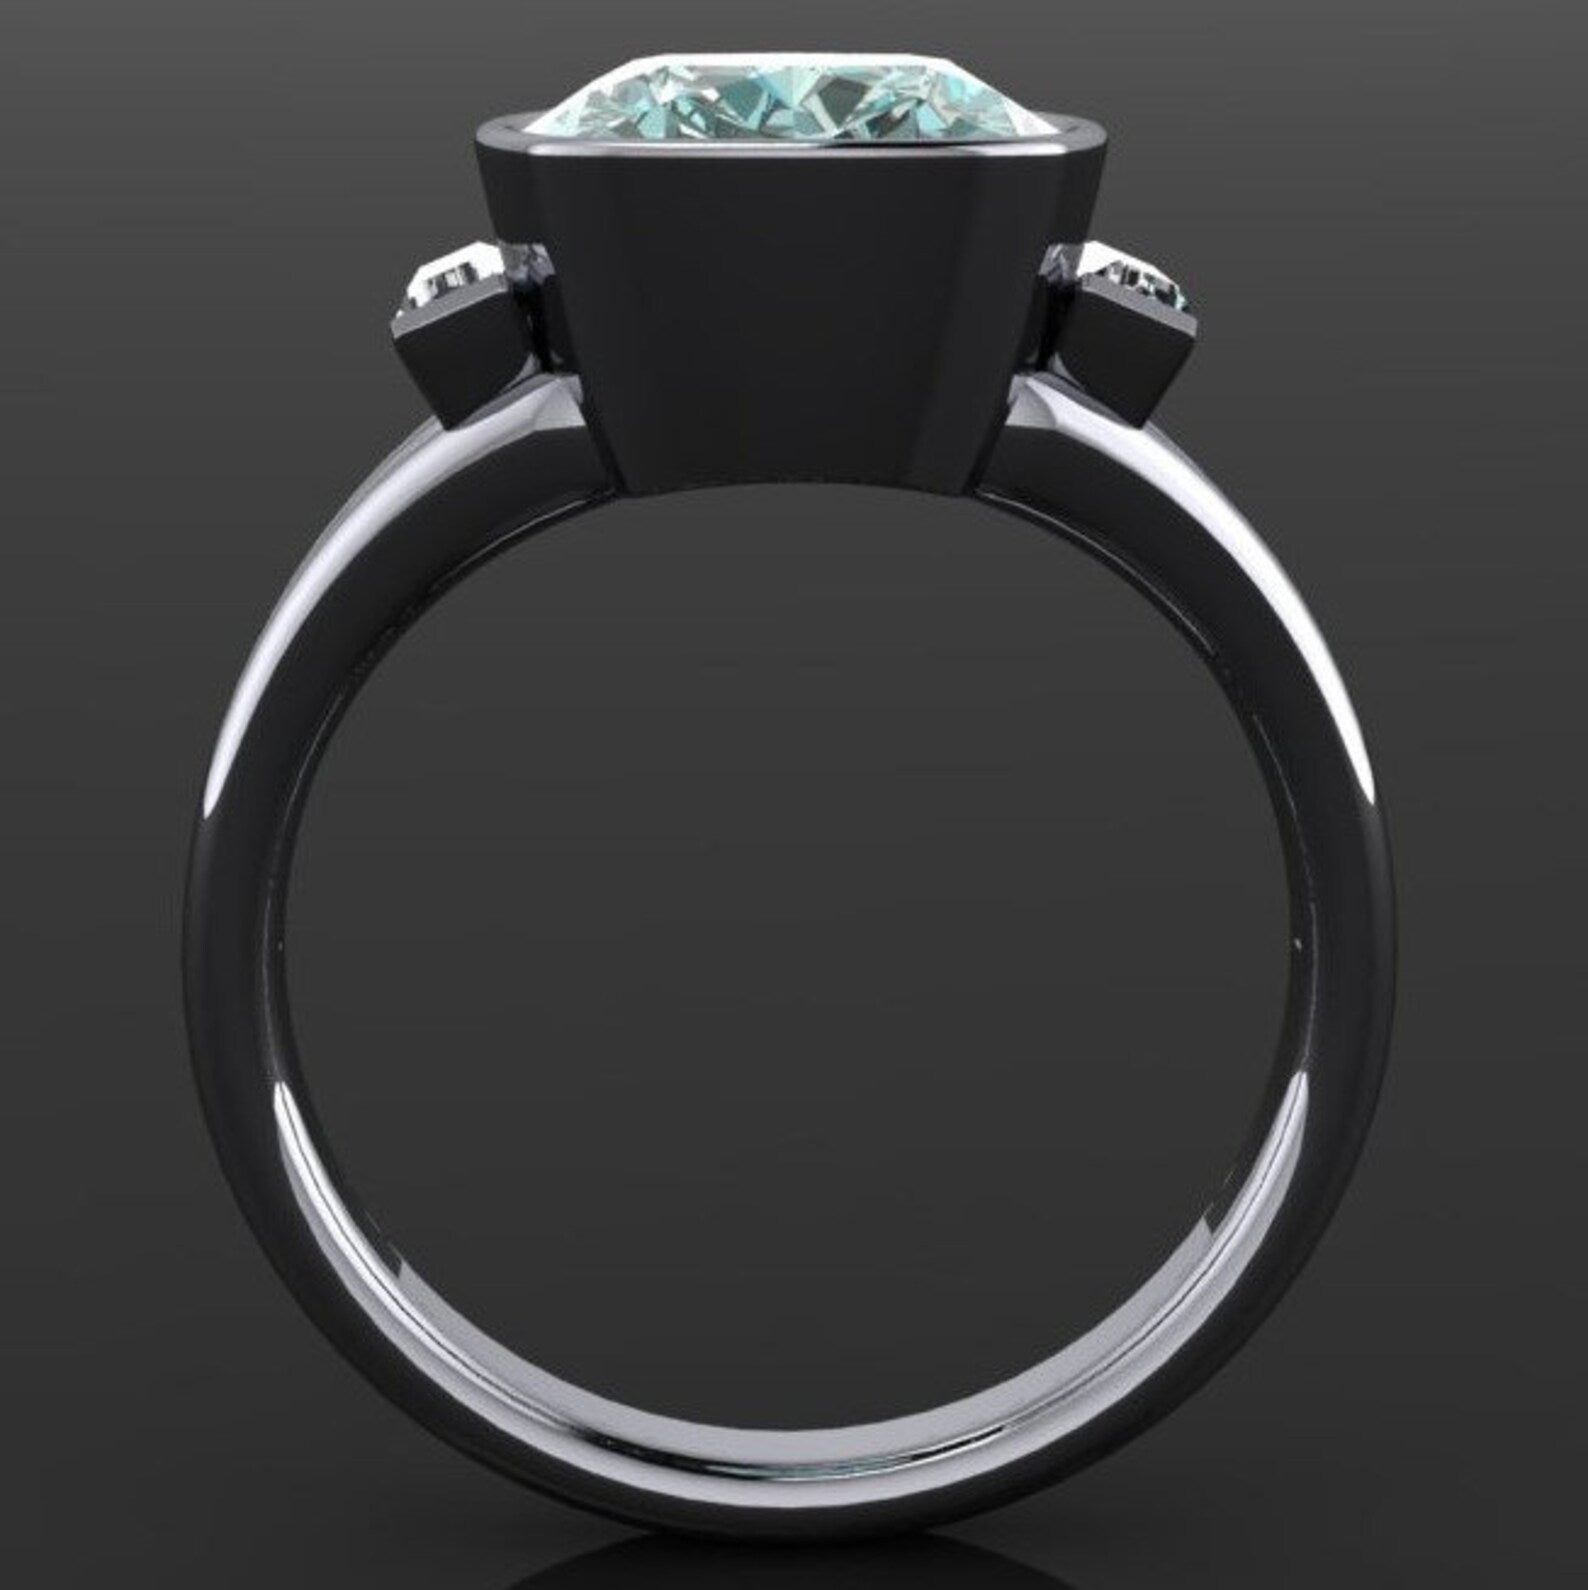 azul ring - 6 carat light blue/green cushion cut ZAYA moissanite engagement ring - J Hollywood Designs